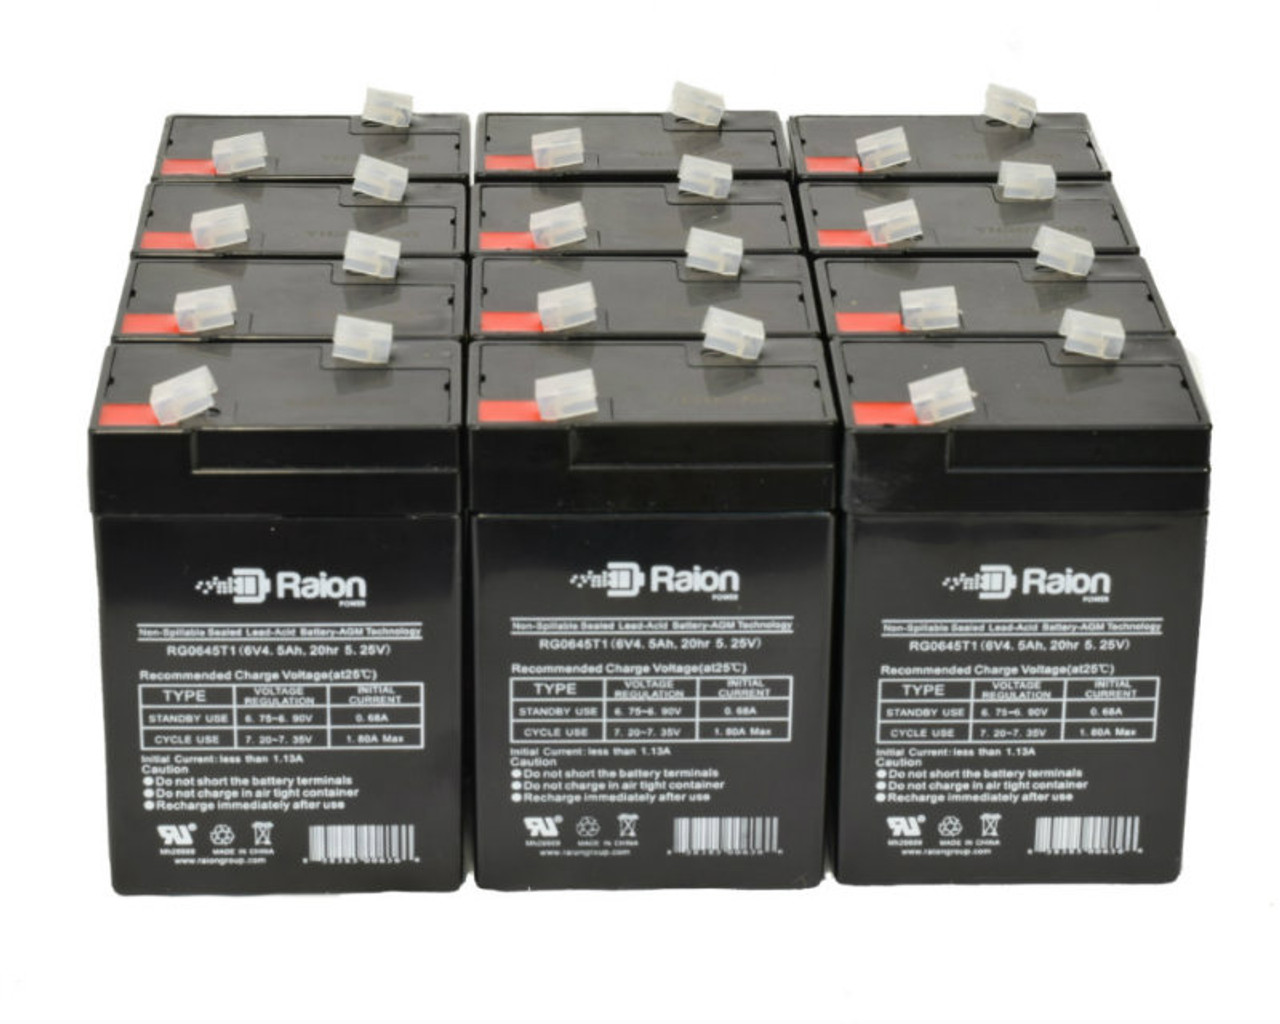 Raion Power 6V 4.5Ah Replacement Emergency Light Battery for Dual-Lite CVT3GW - 12 Pack